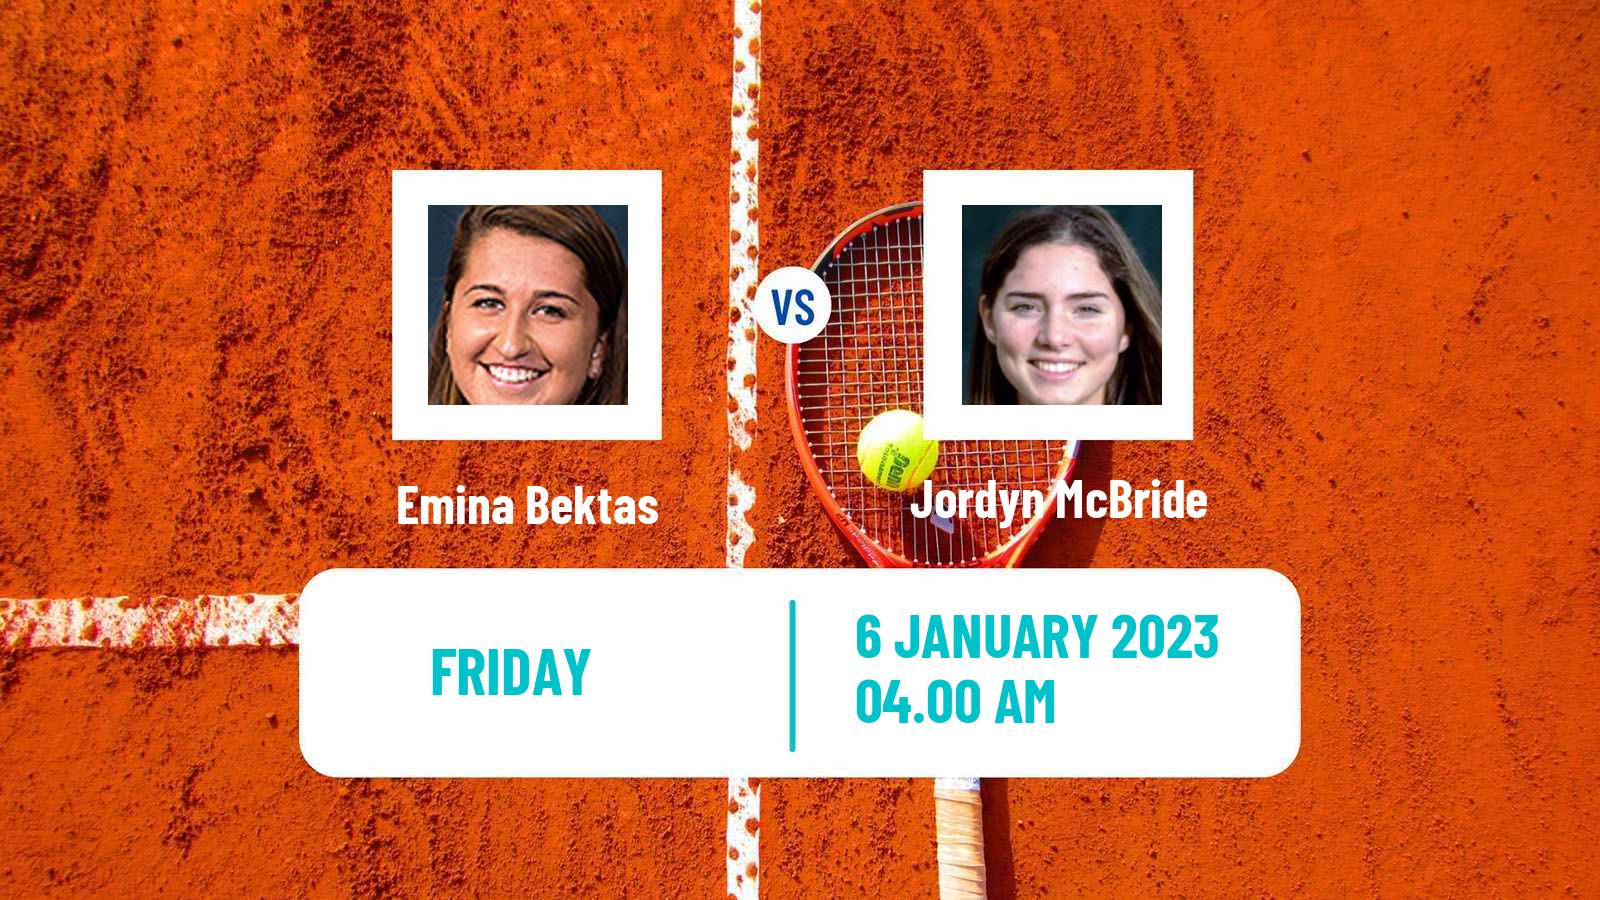 Tennis ITF Tournaments Emina Bektas - Jordyn McBride